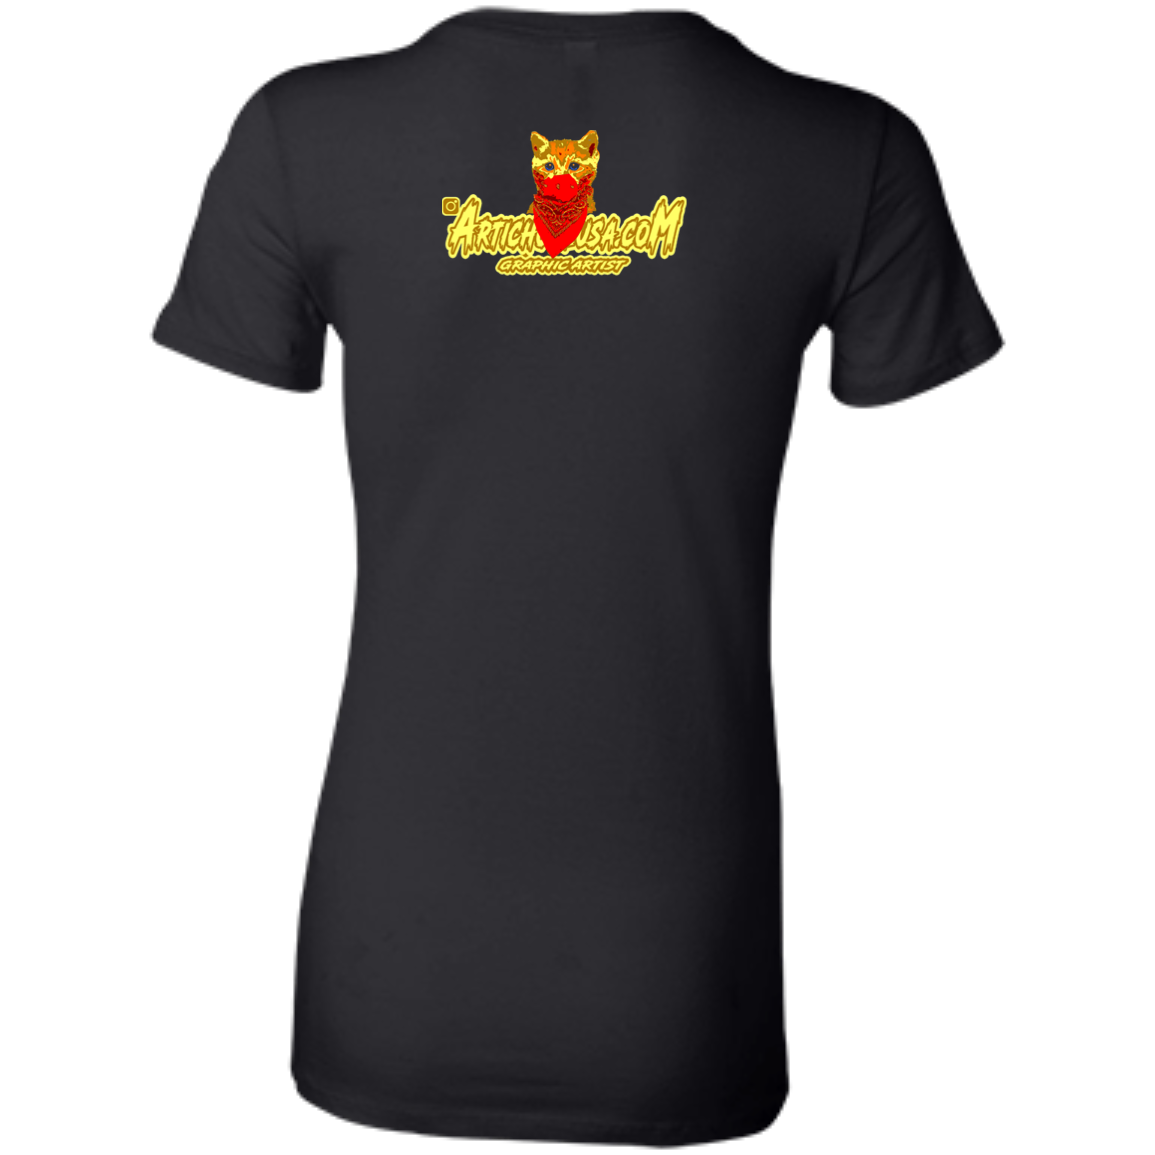 ArtichokeUSA Custom Design. You've Got To Be Kitten Me?! 2020, Not What We Expected. Ladies' Favorite T-Shirt